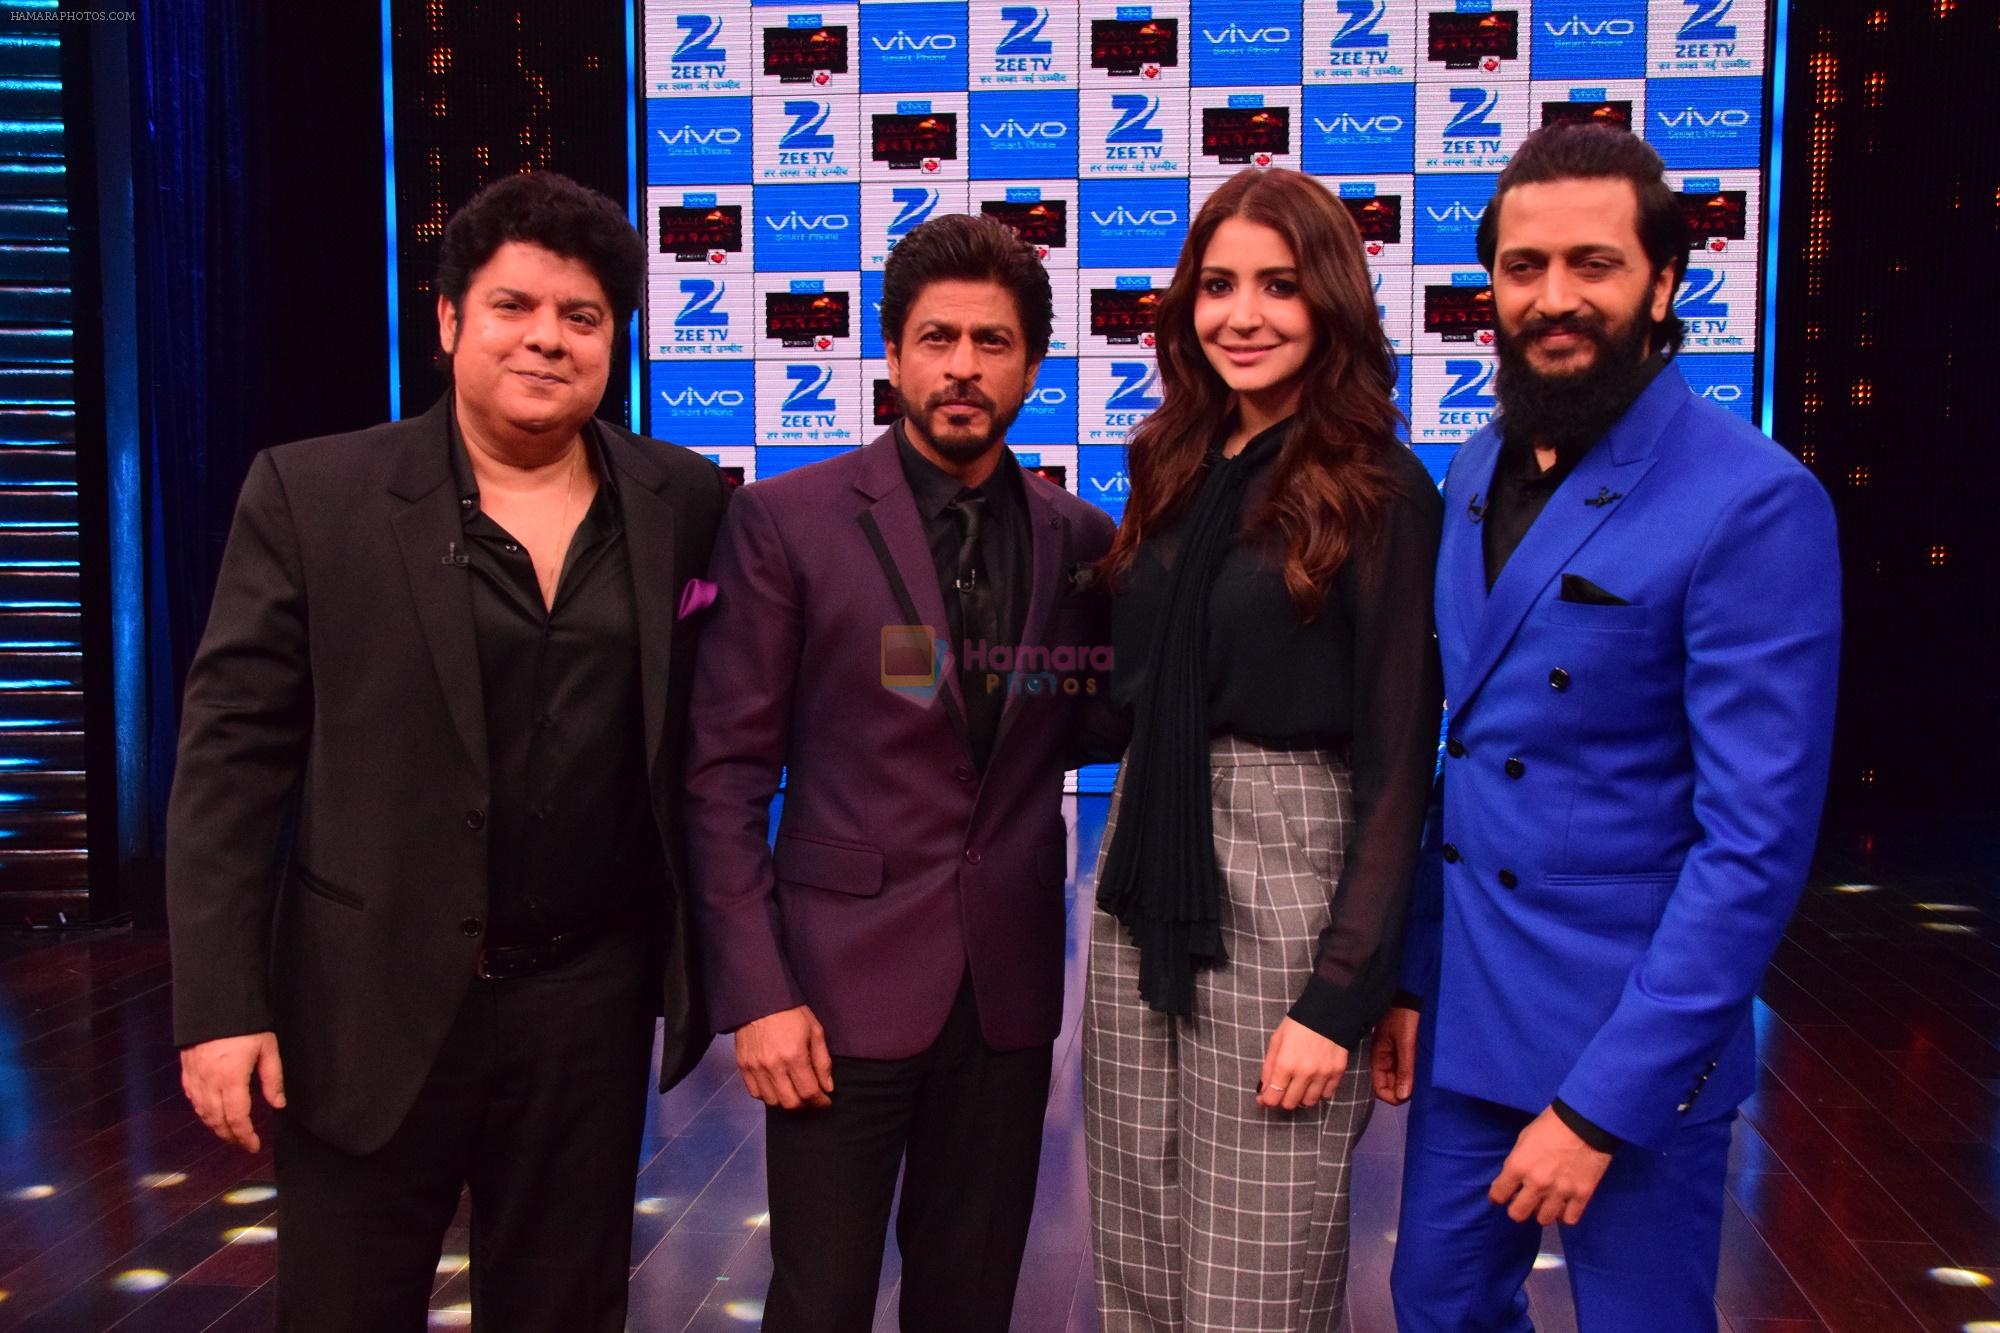 Shah Rukh Khan and Anushka Sharma with hosts Sajid and Riteish